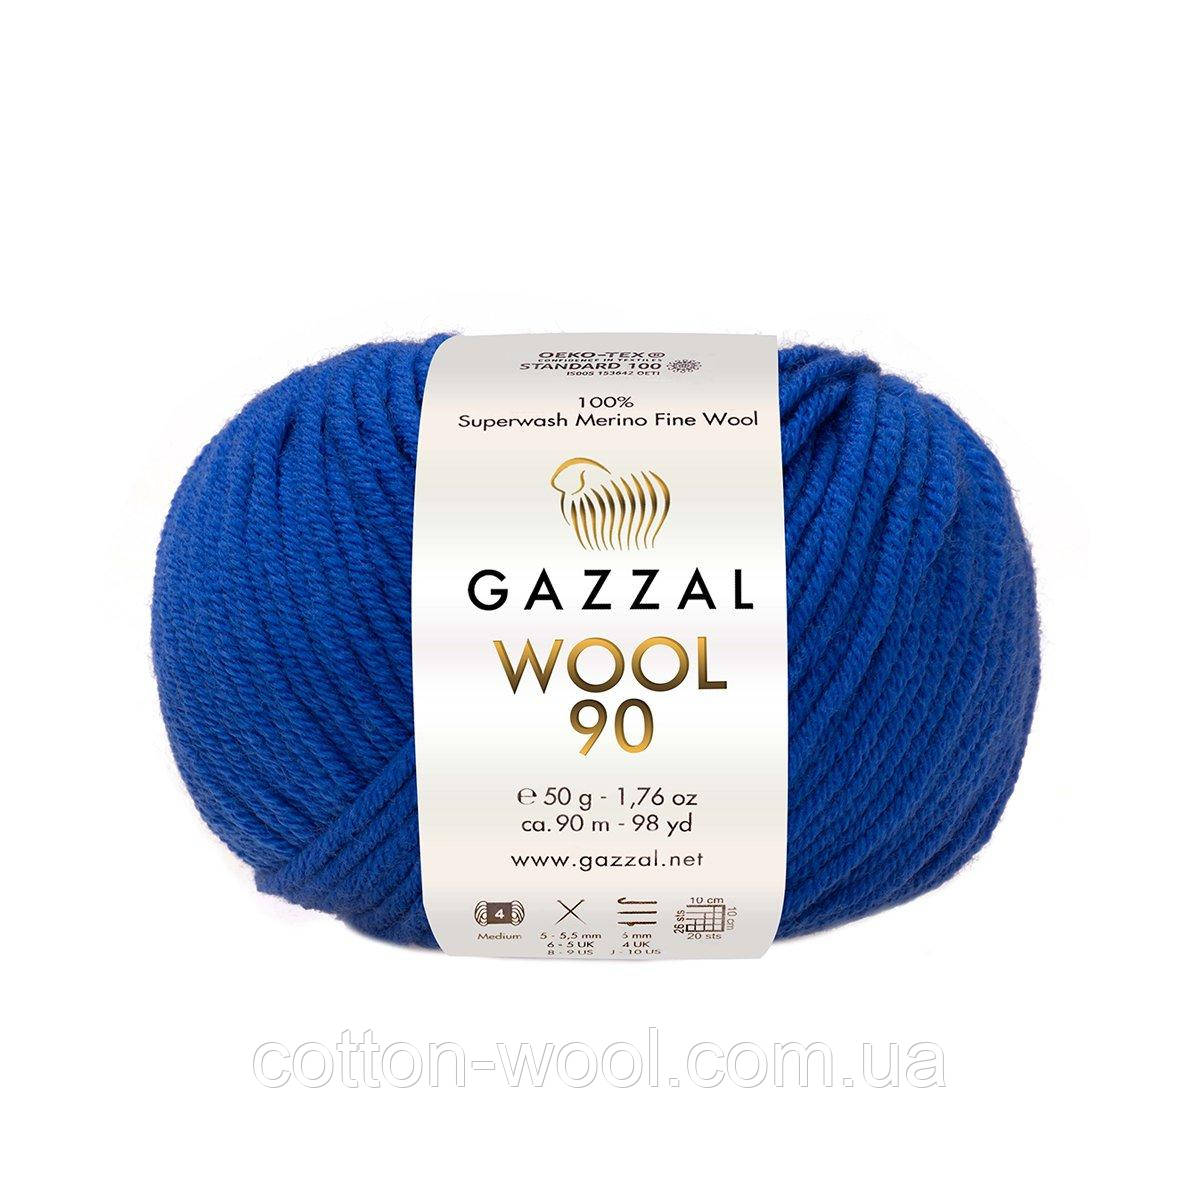 Gazzal Wool 90 (Газзал Вул 90) 3688